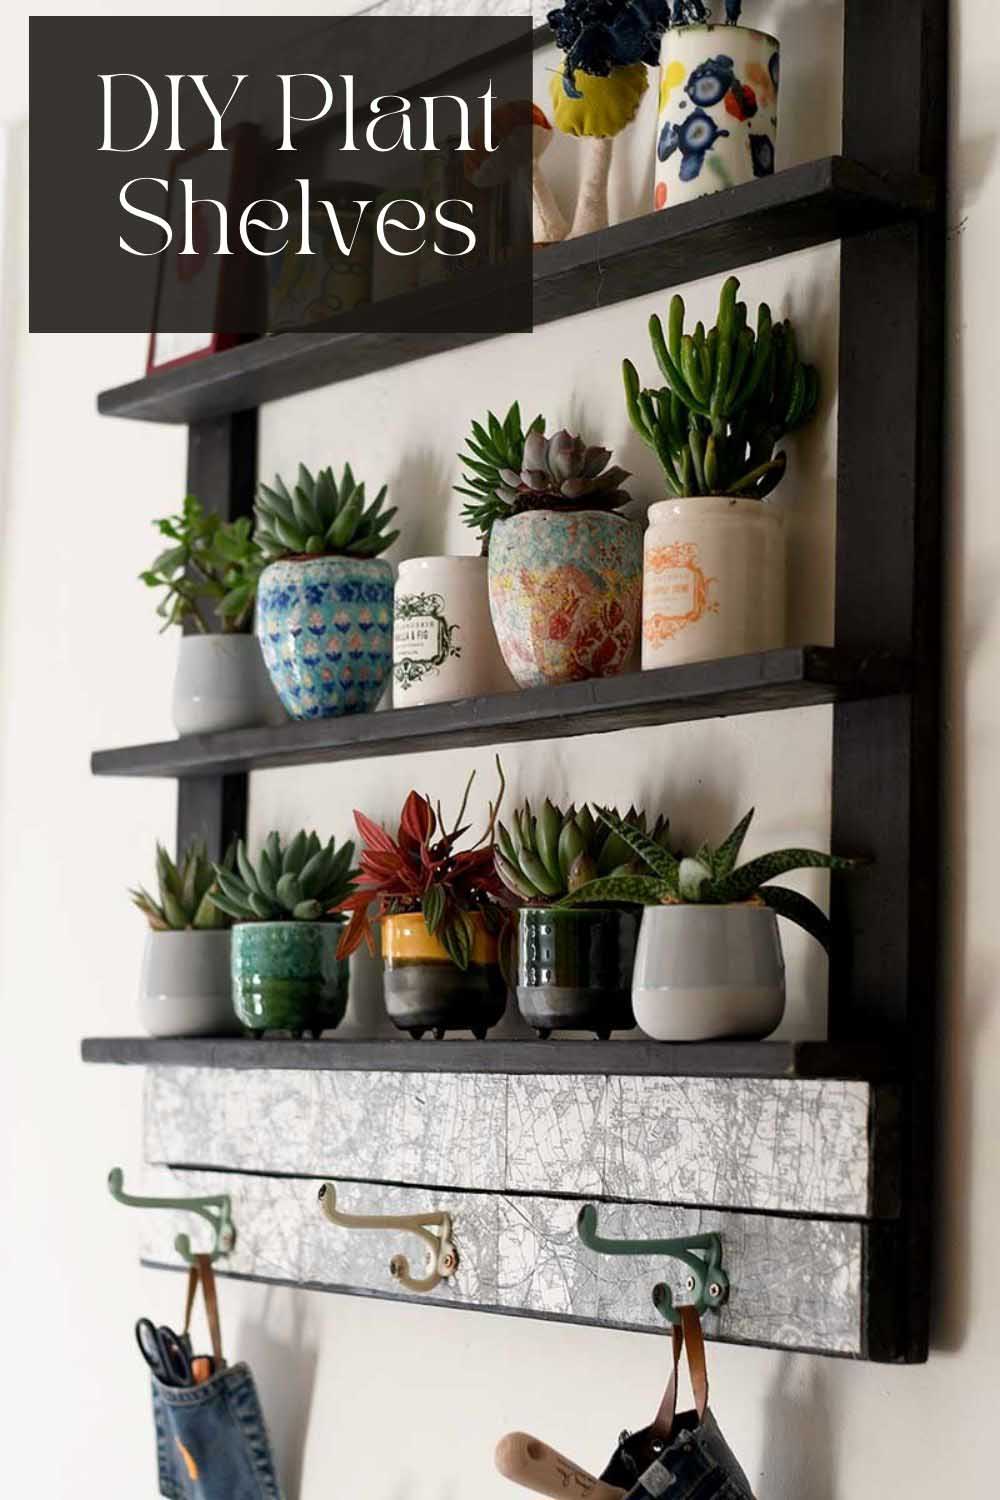 DIY plant shelves from bed slats